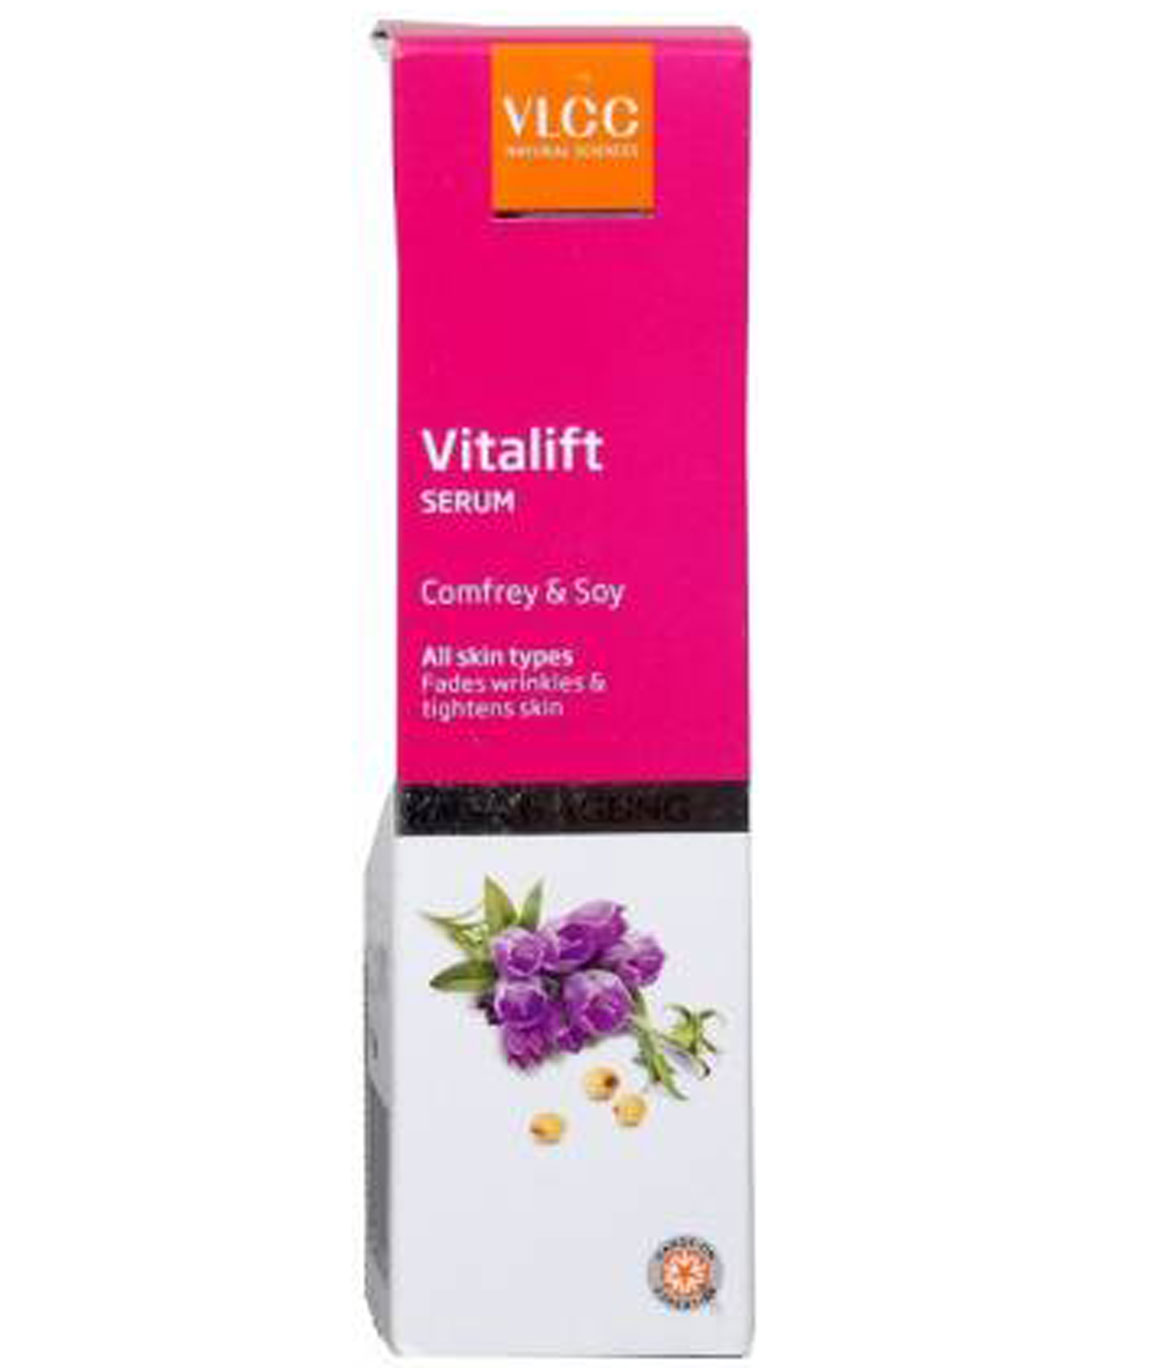 VLCC Anti Aging Vitalift Serum, 40ml